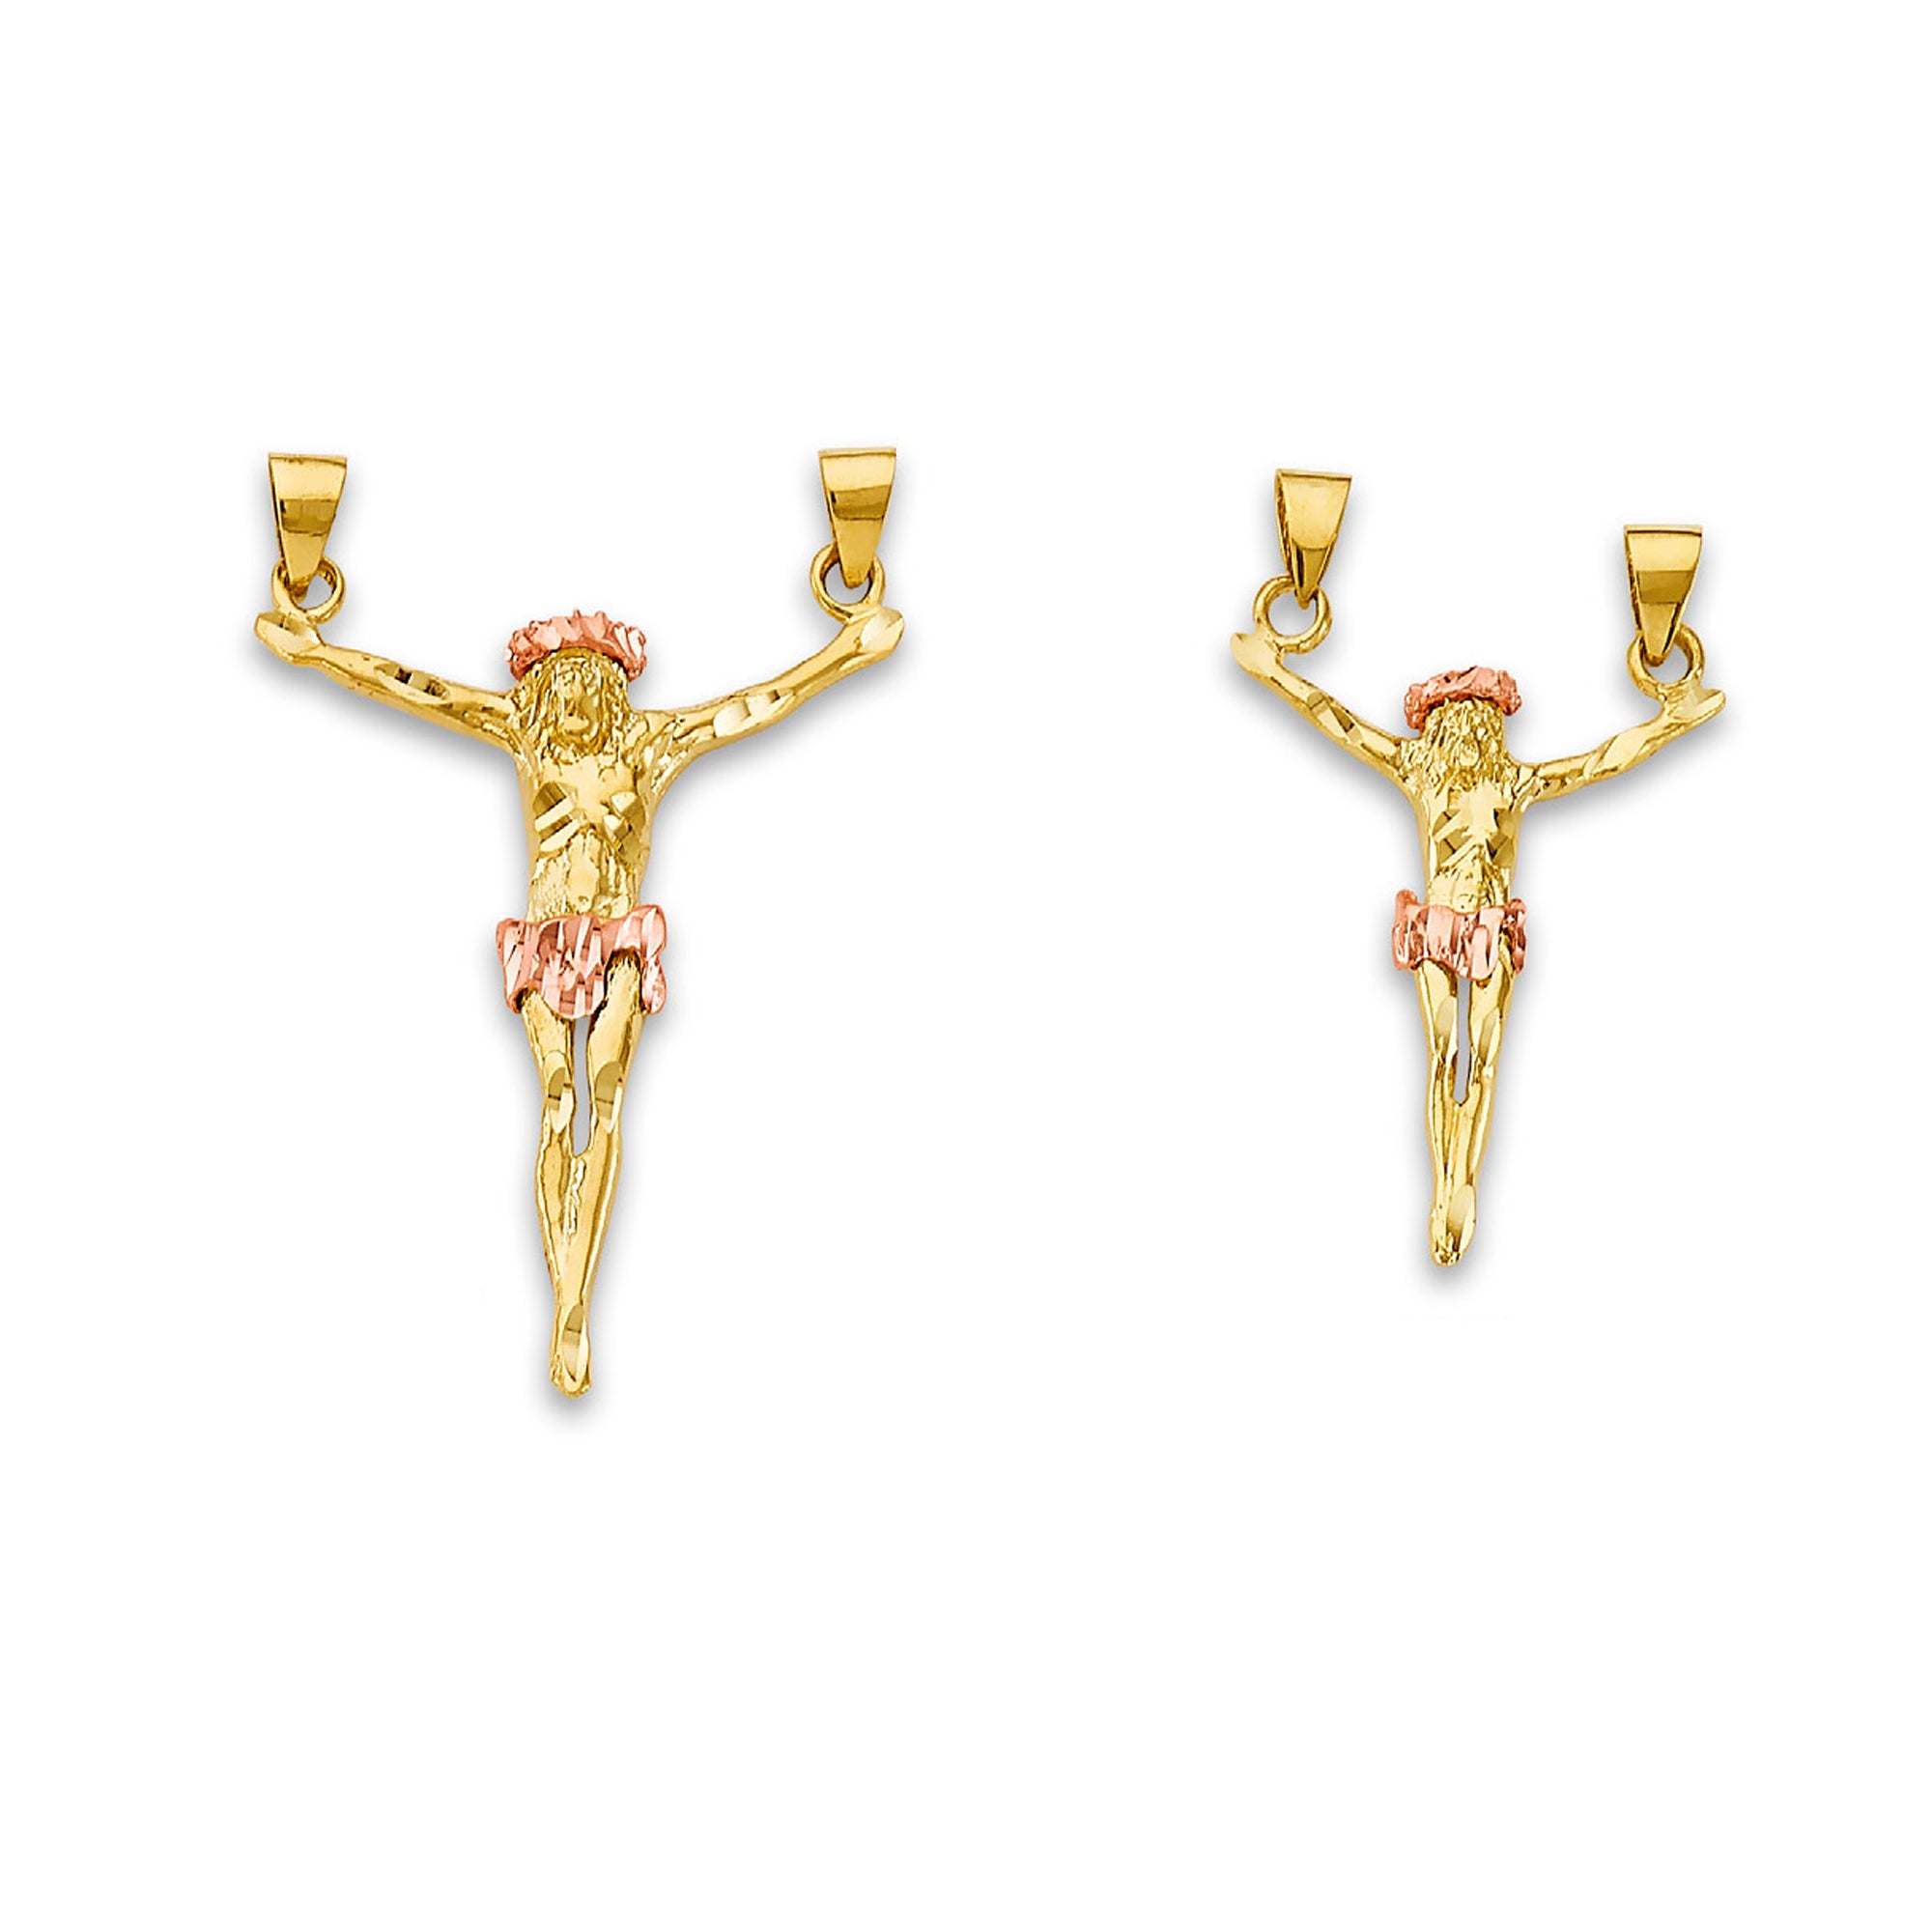 Two Tone Gold Jesus Christ Crucifix Religious Pendant